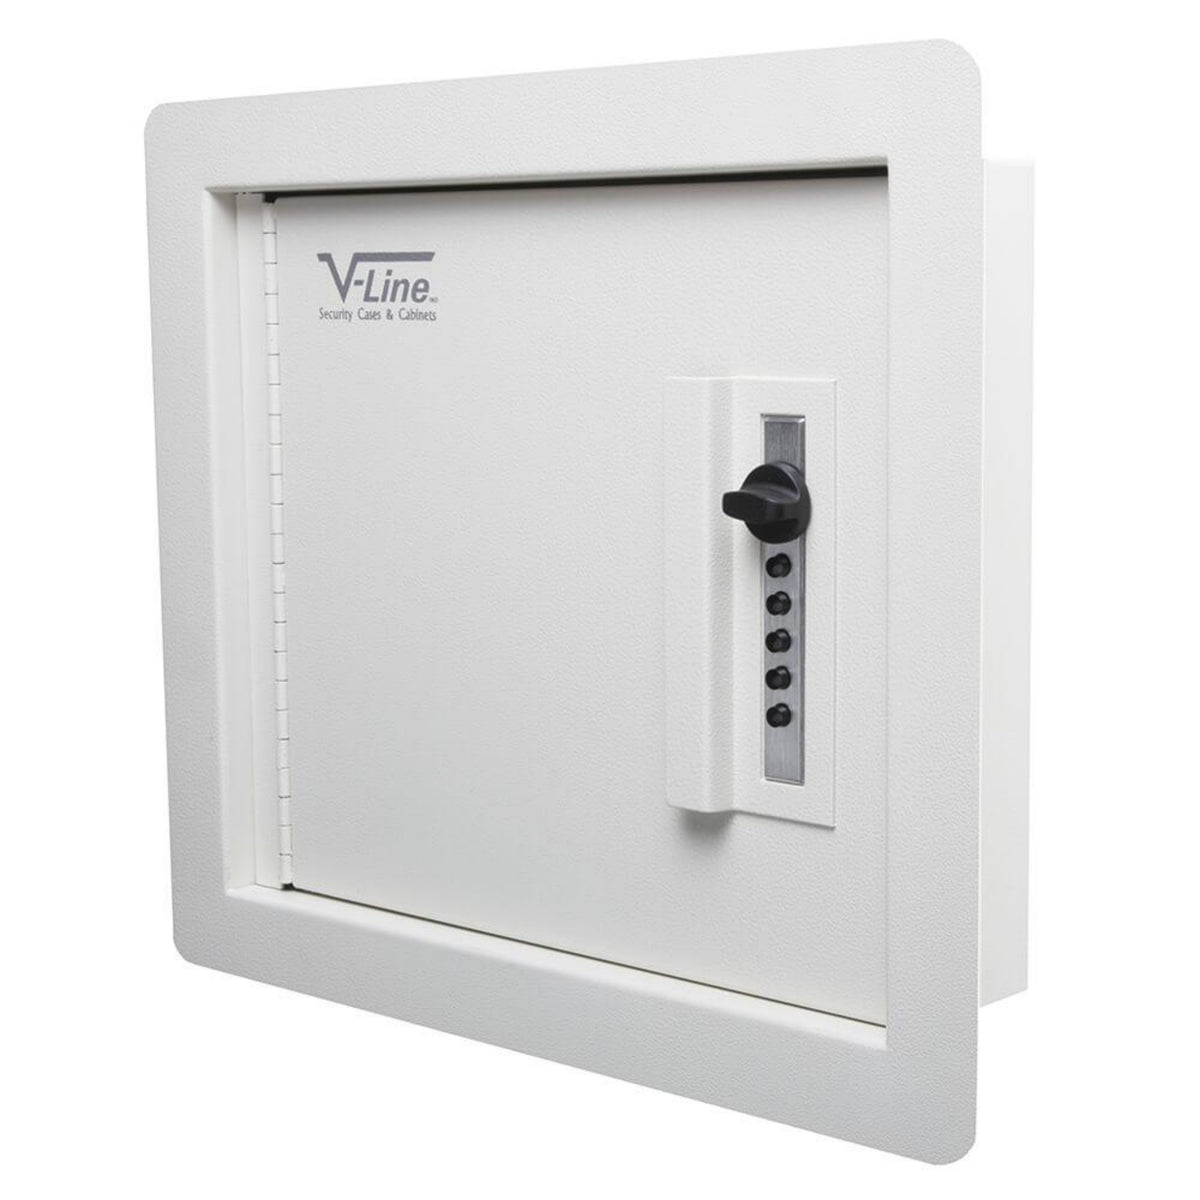 V-Line Wall Safe Quick Vault Model 41214-S, part of the Dean Safe wall safe collection